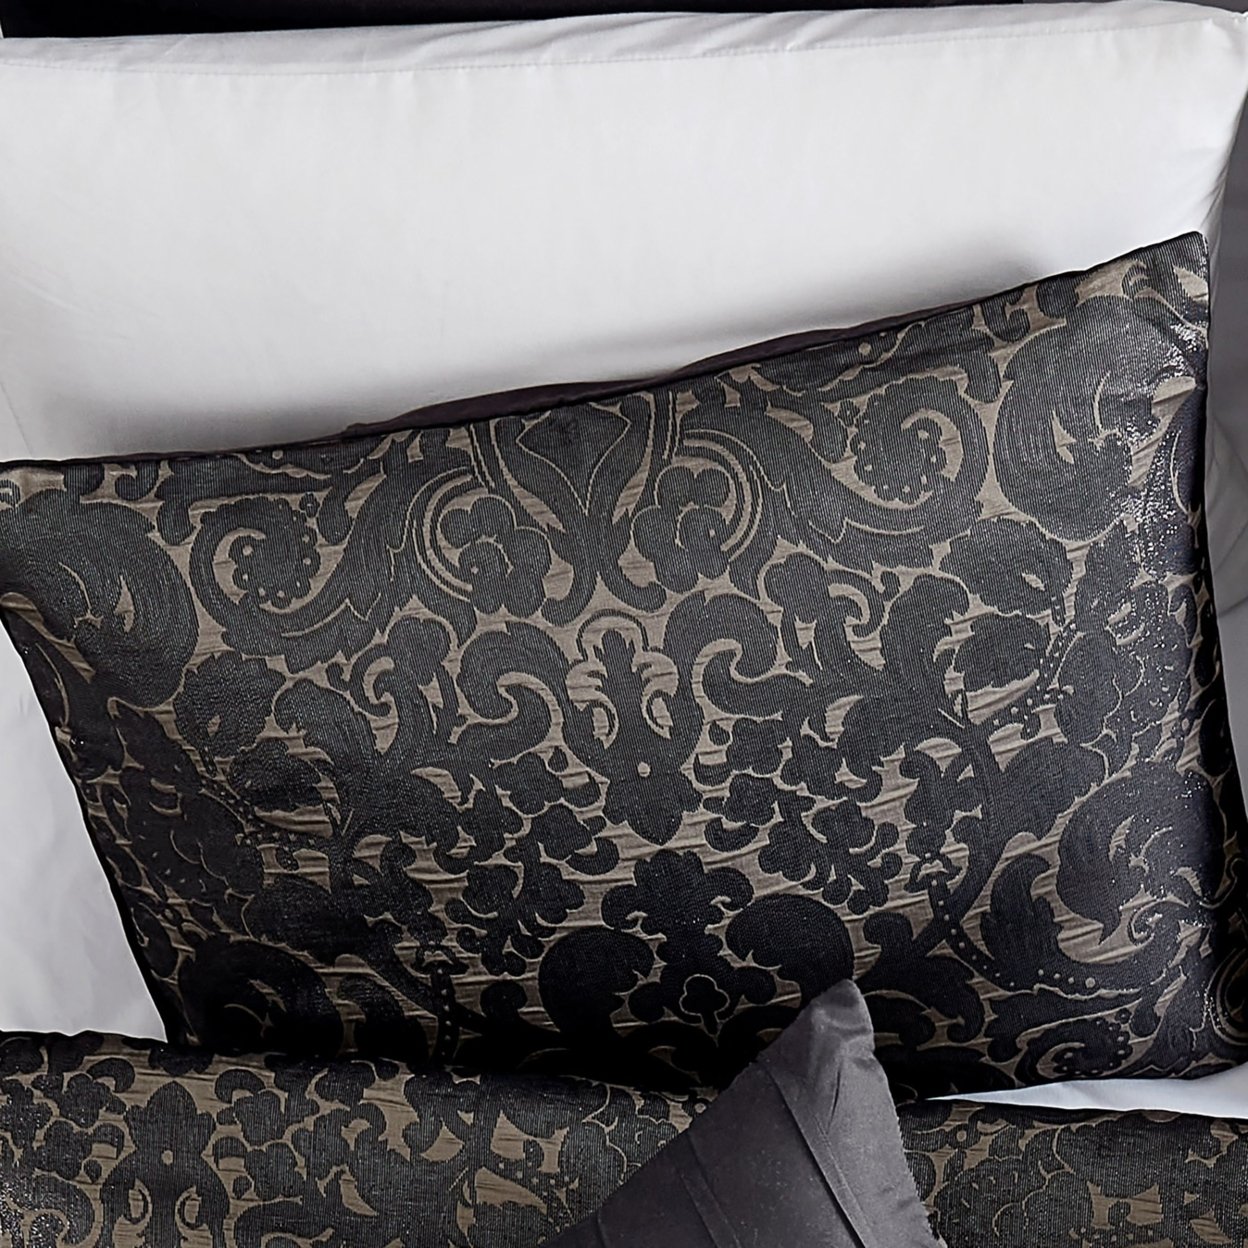 Pixie 9 Piece Polyester Queen Comforter Set, Damask Pattern, Charcoal Gray- Saltoro Sherpi